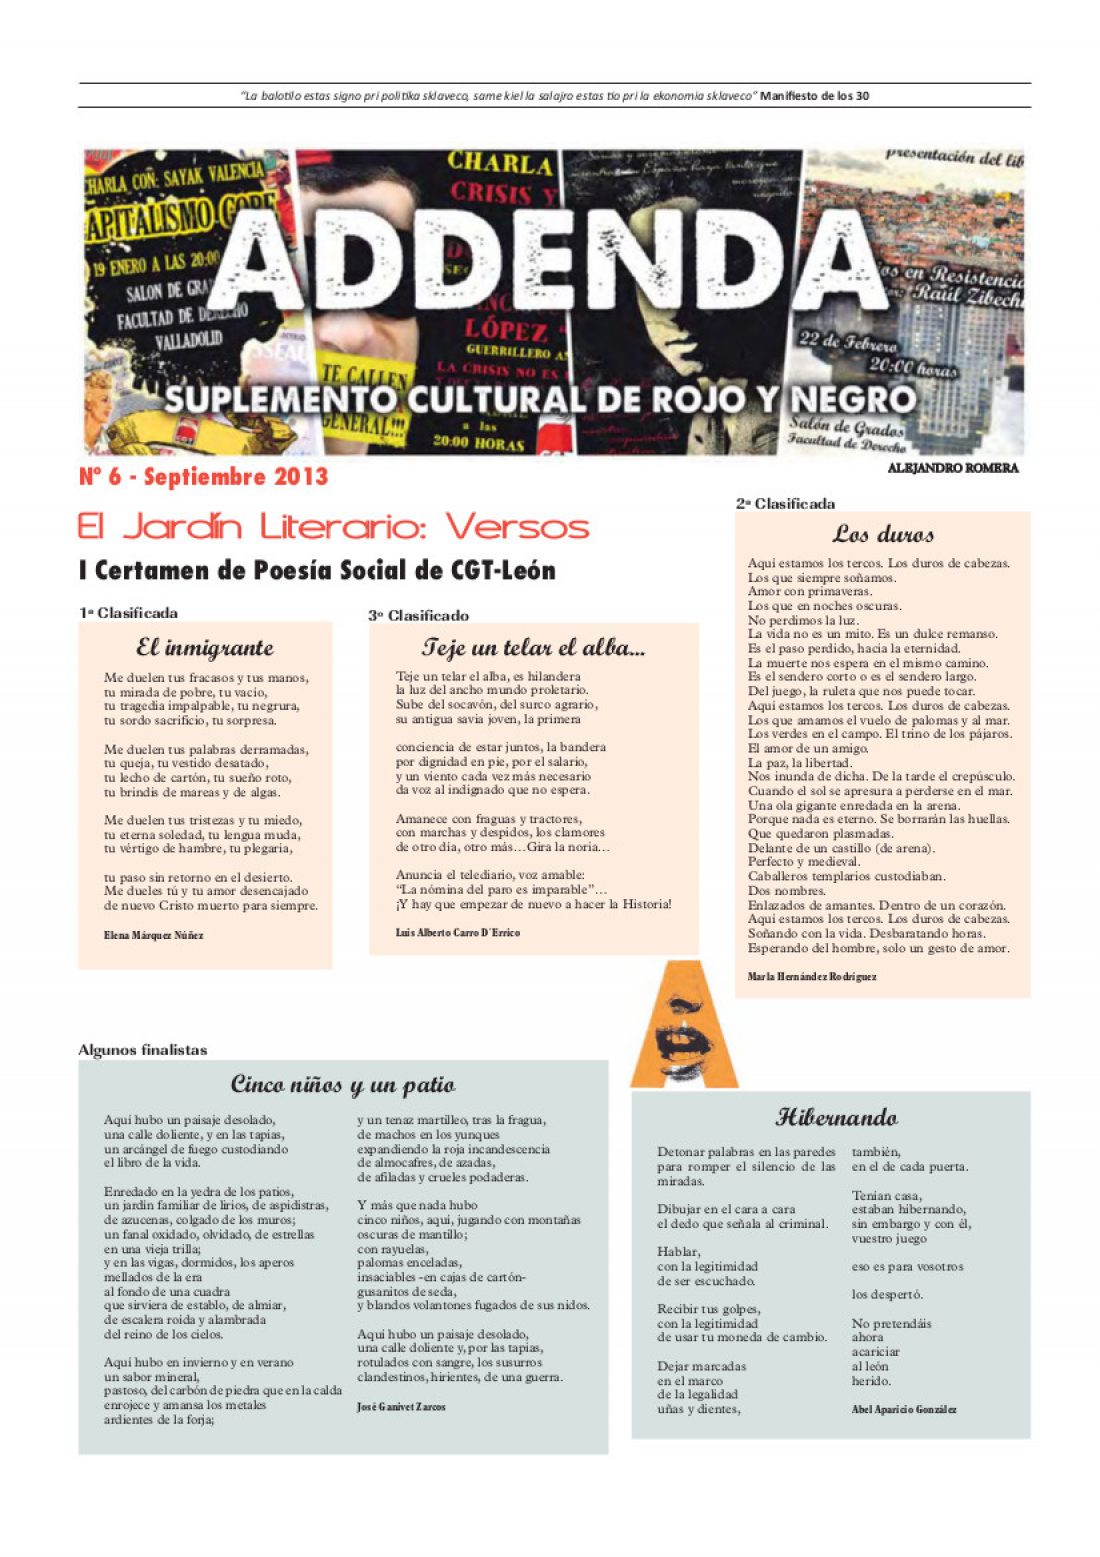 Addenda, suplemento cultural del RyN – Nº 6, septiembre 2013